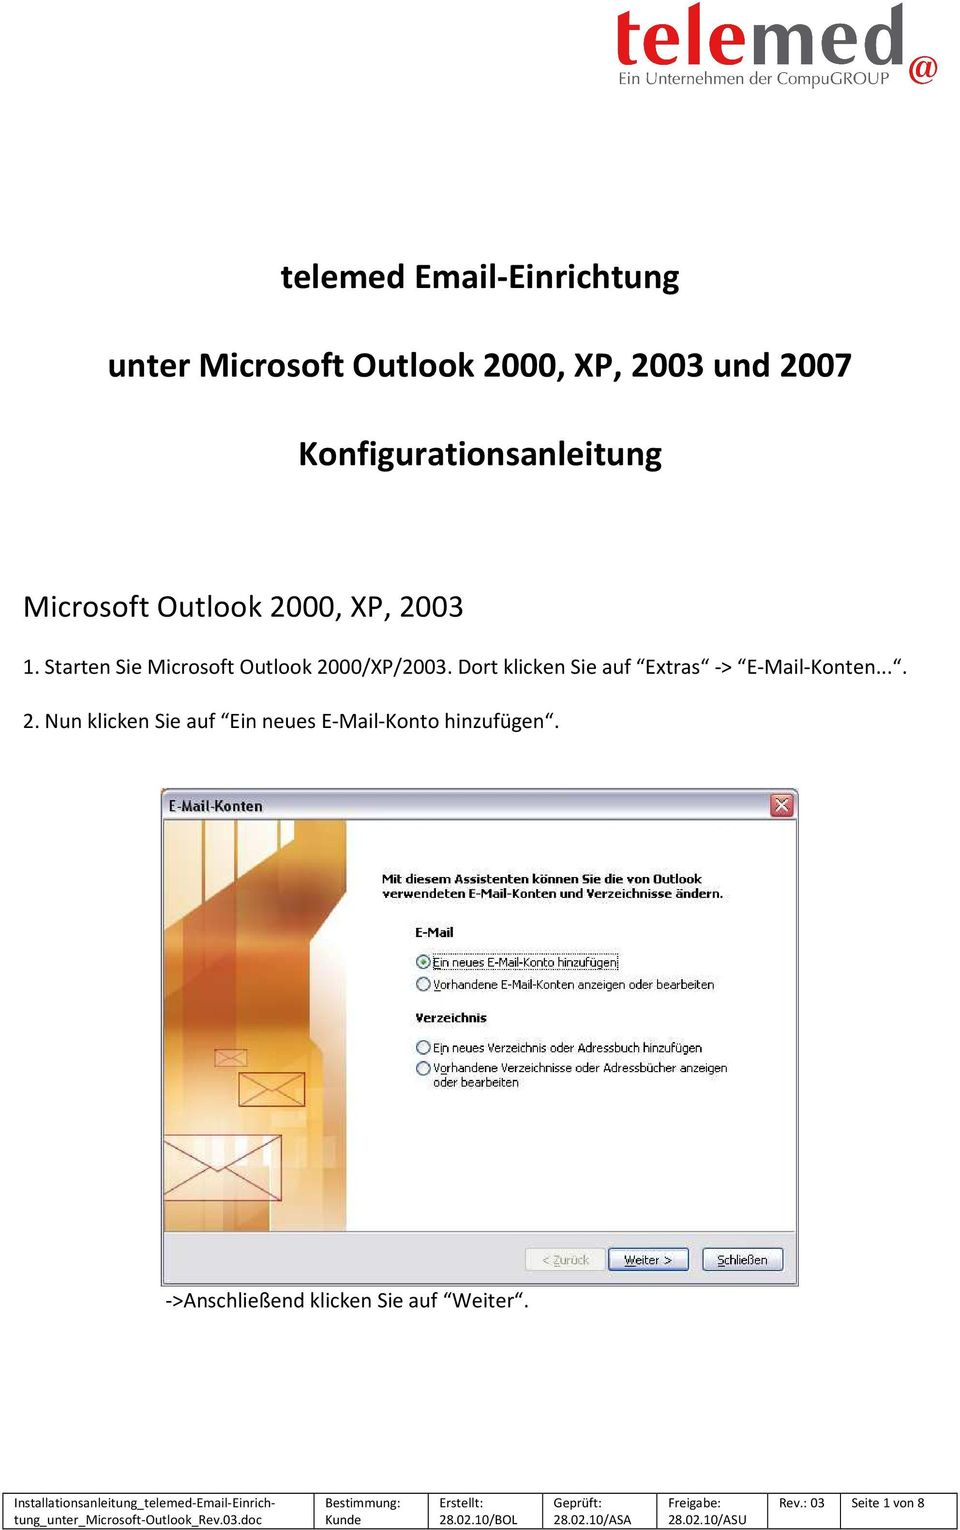 Starten Sie Microsoft Outlook 2000/XP/2003.